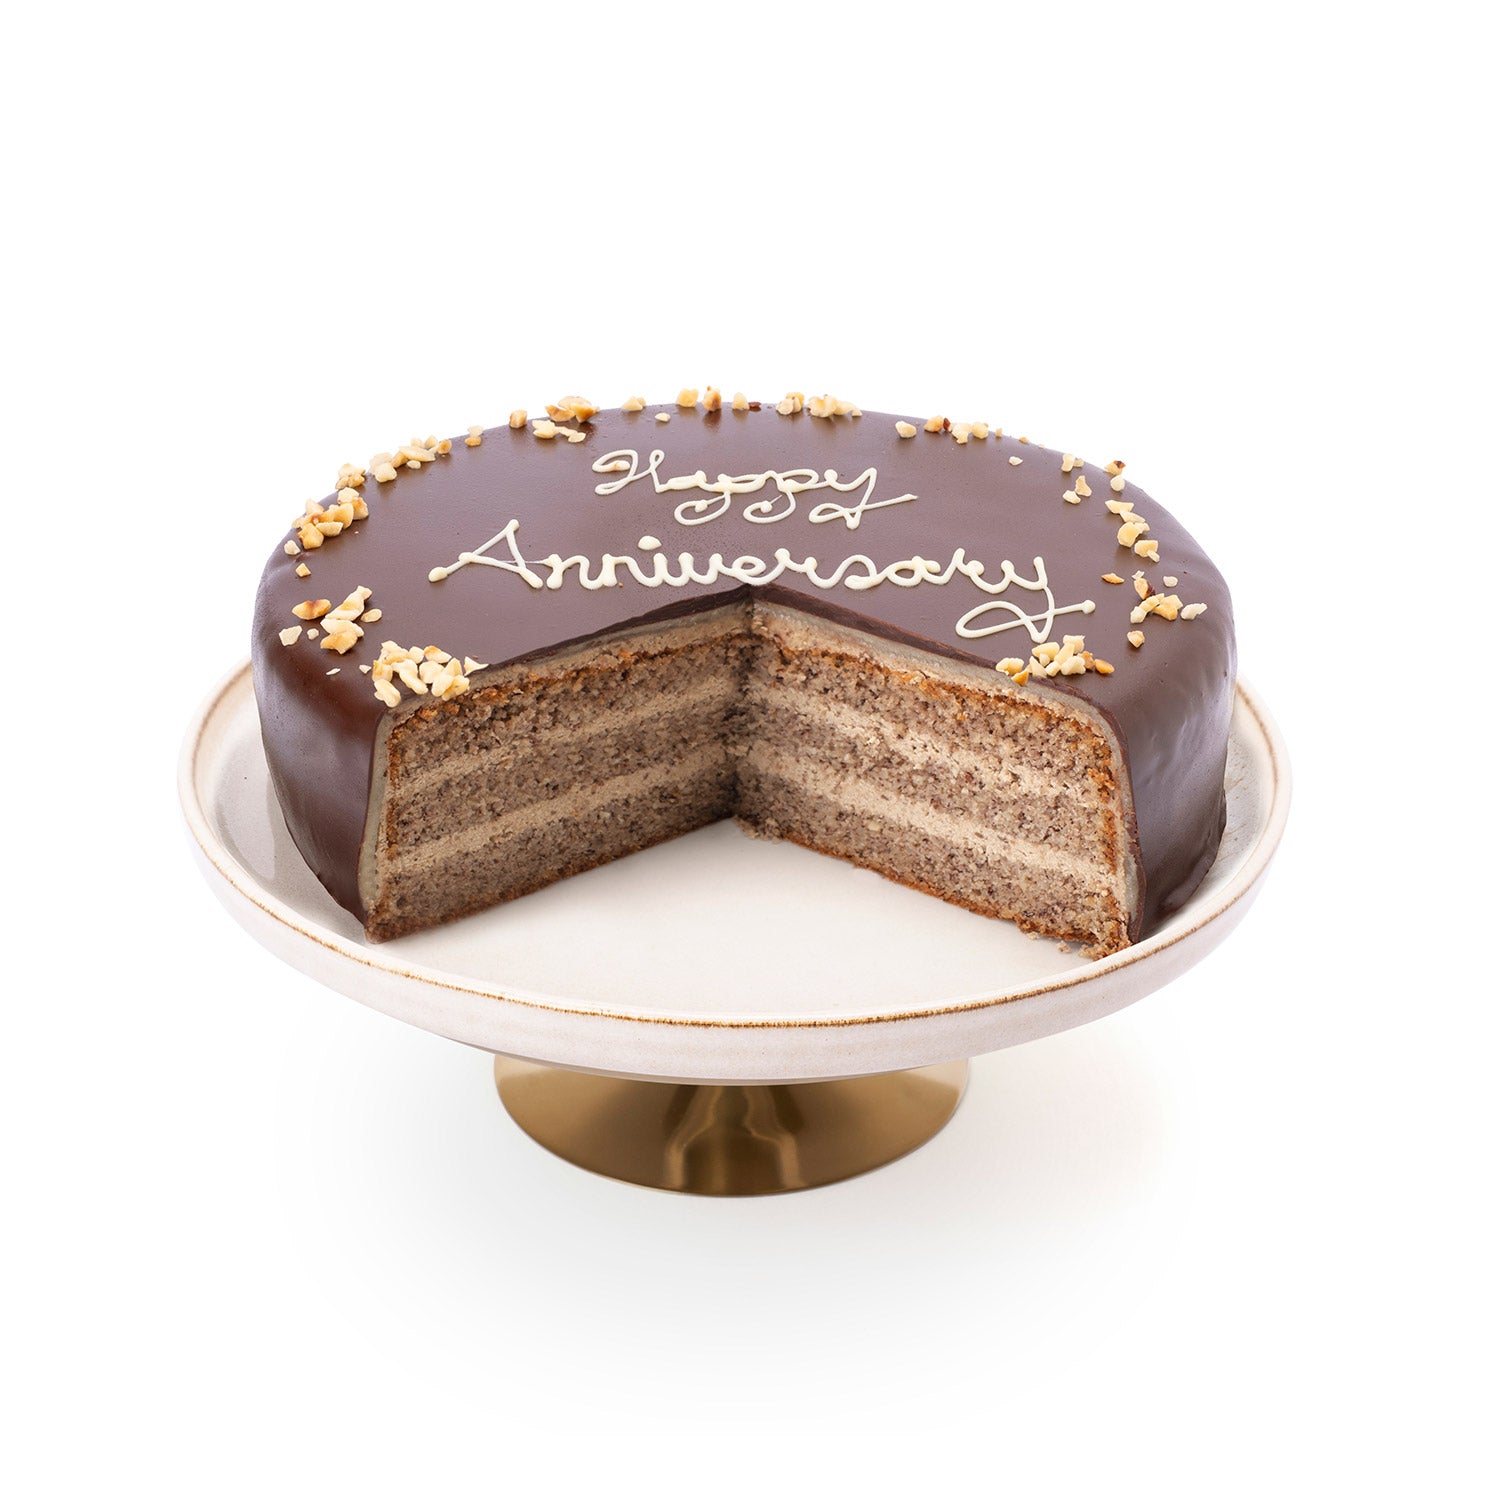 marontorte austrian chestnut celebration cake